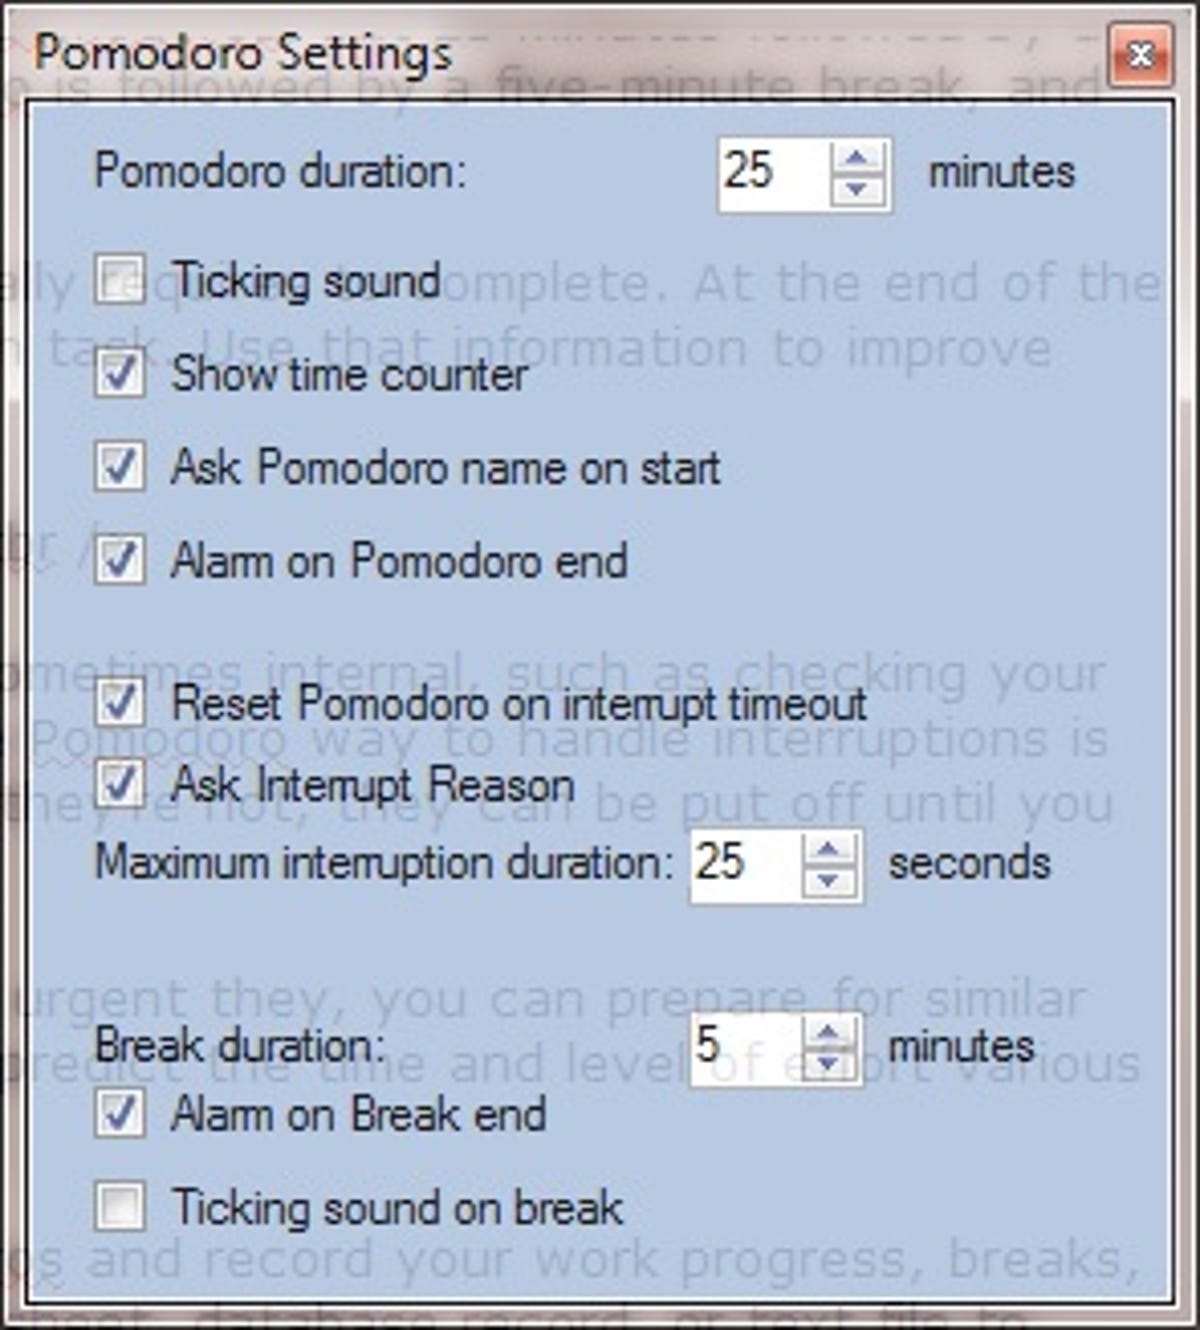 Pomodoro Timer settings dialog box